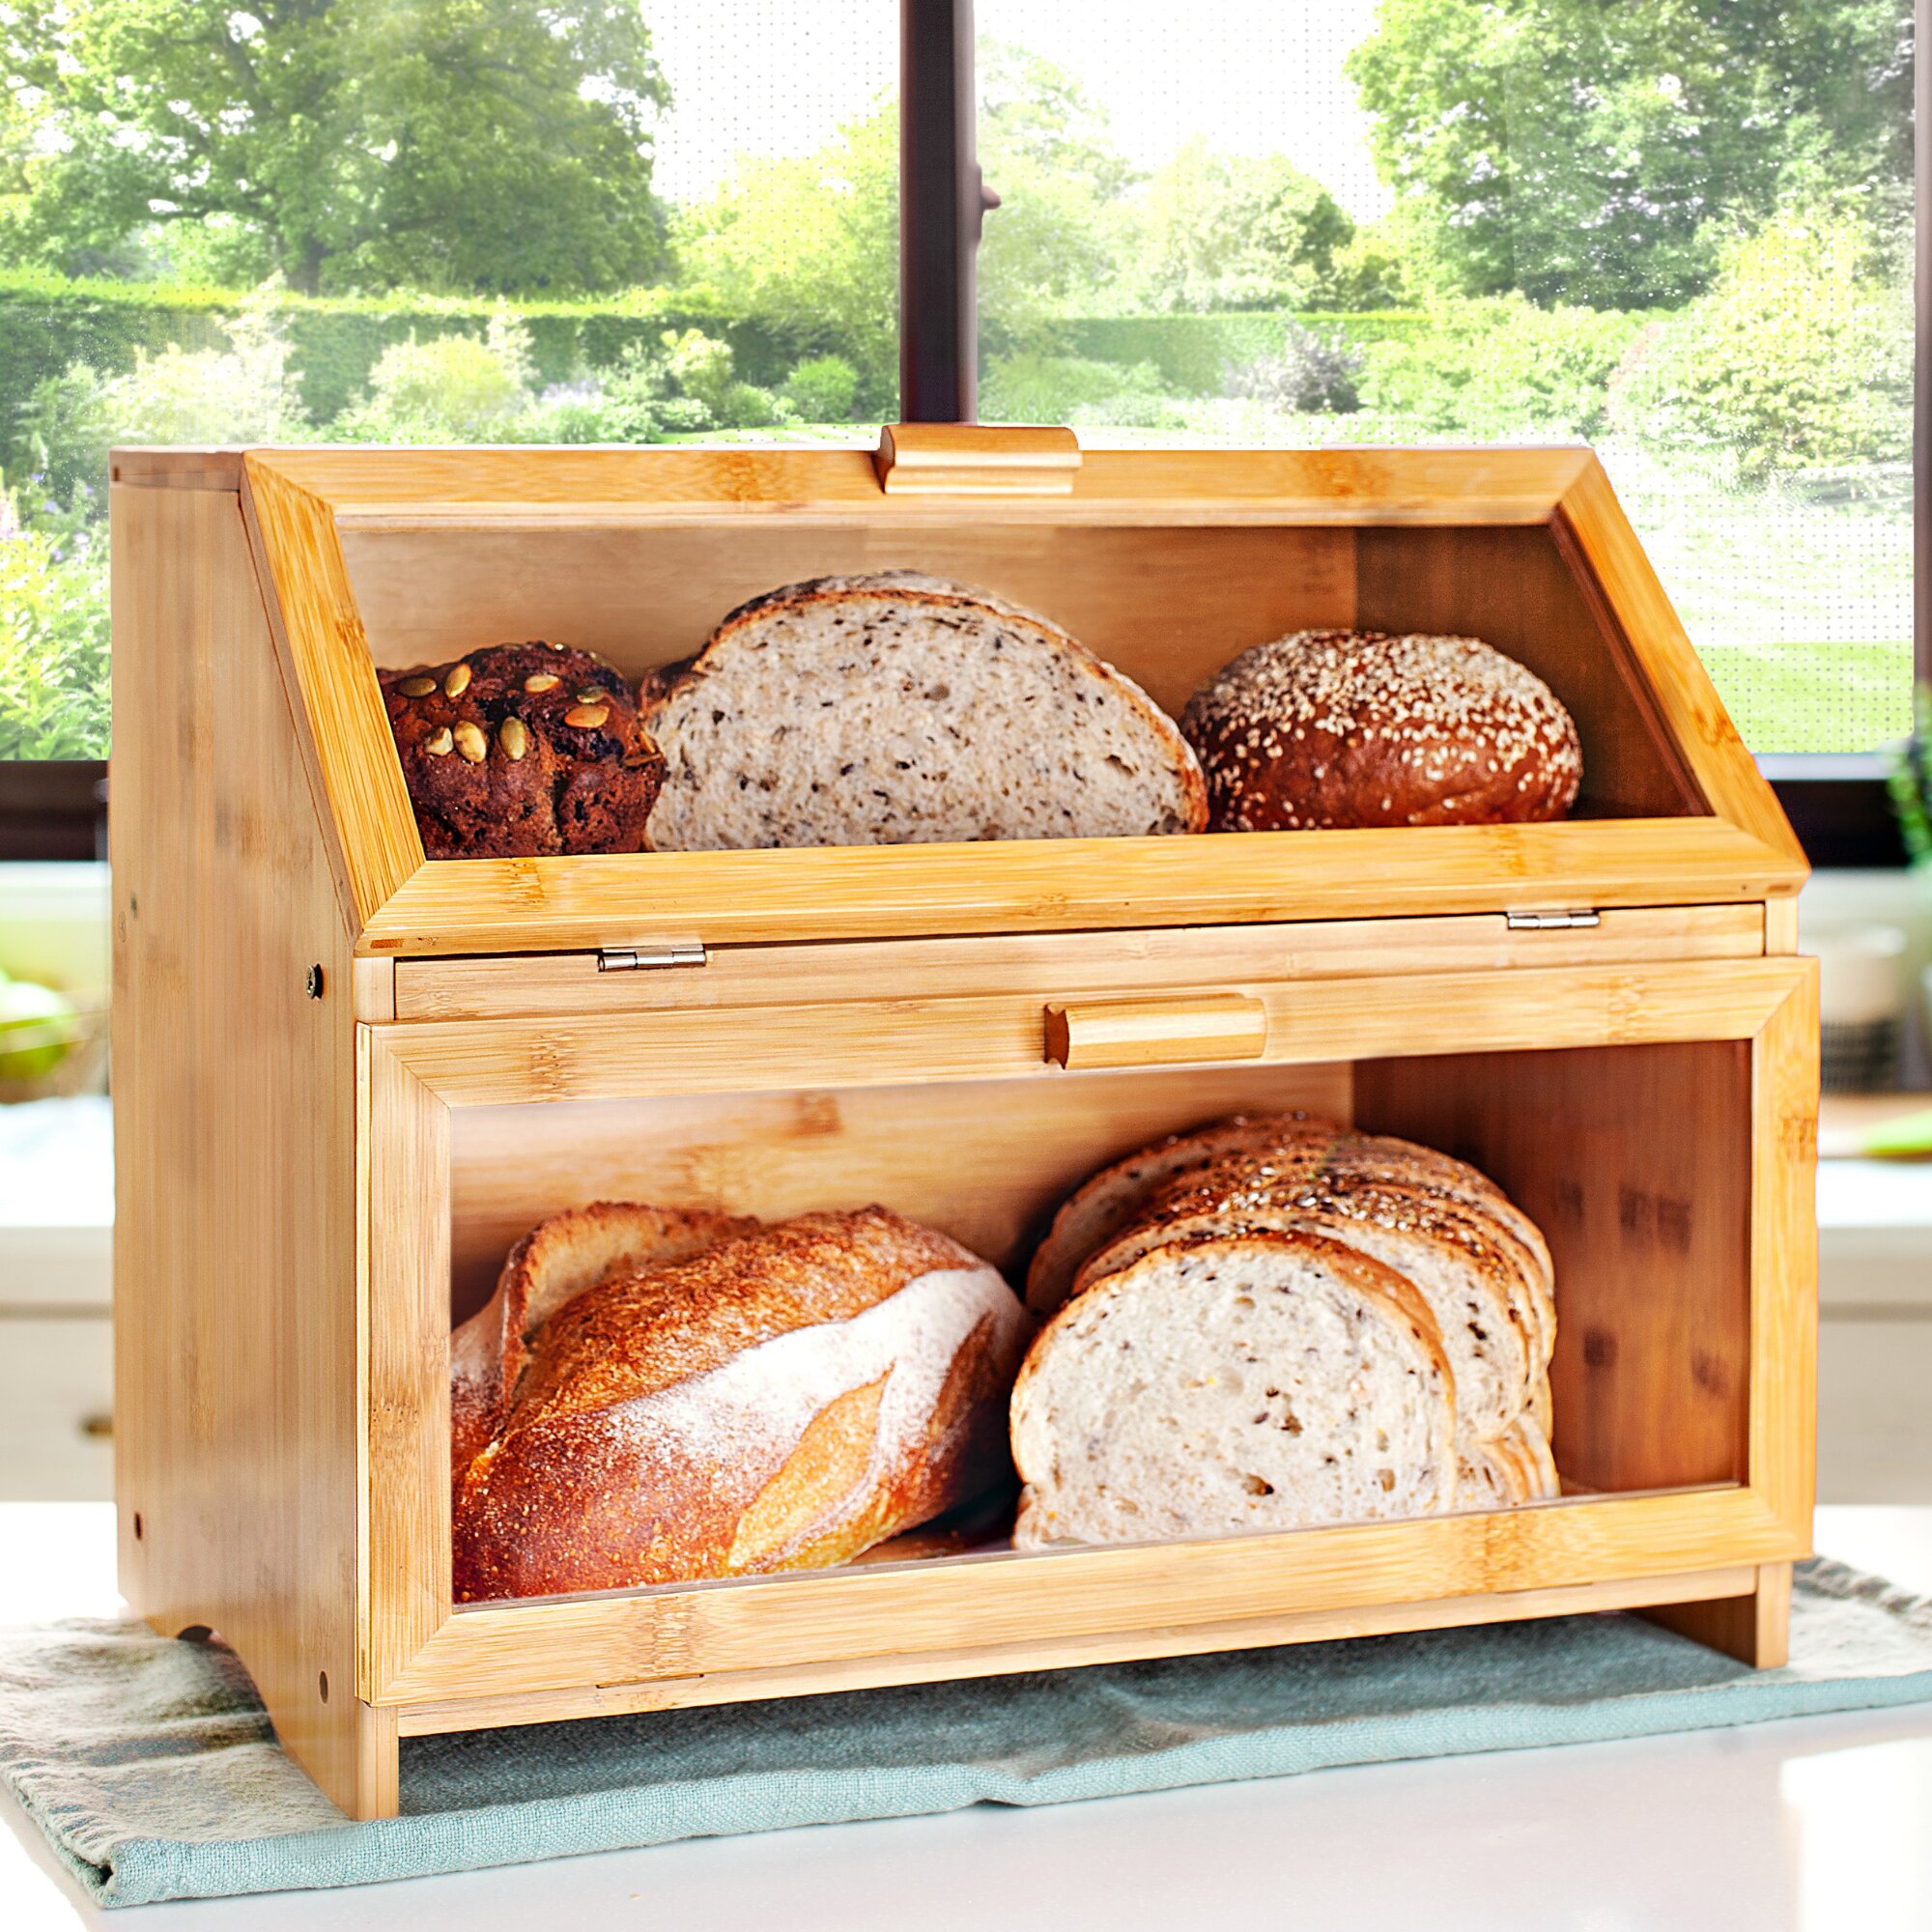 3Pcs Bread Container Airtight Bread Box Loaf Container Bread